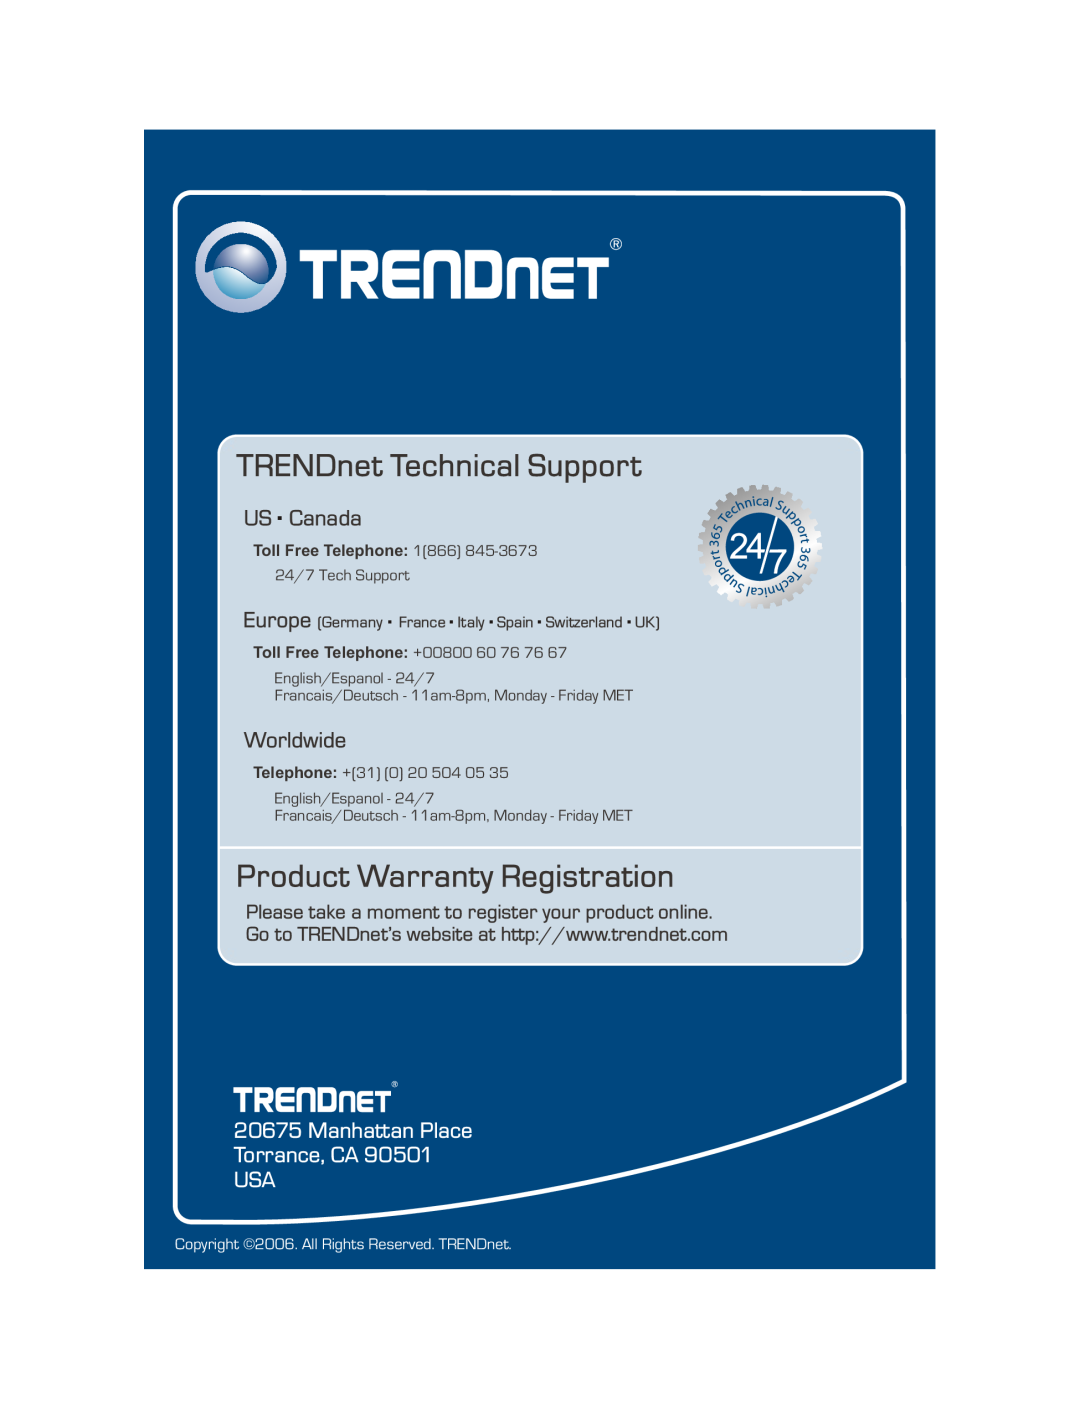 TRENDnet TBW-105UB TRENDnet Technical Support, Product Warranty Registration, US . Canada, Worldwide, 24/7 Tech Support 